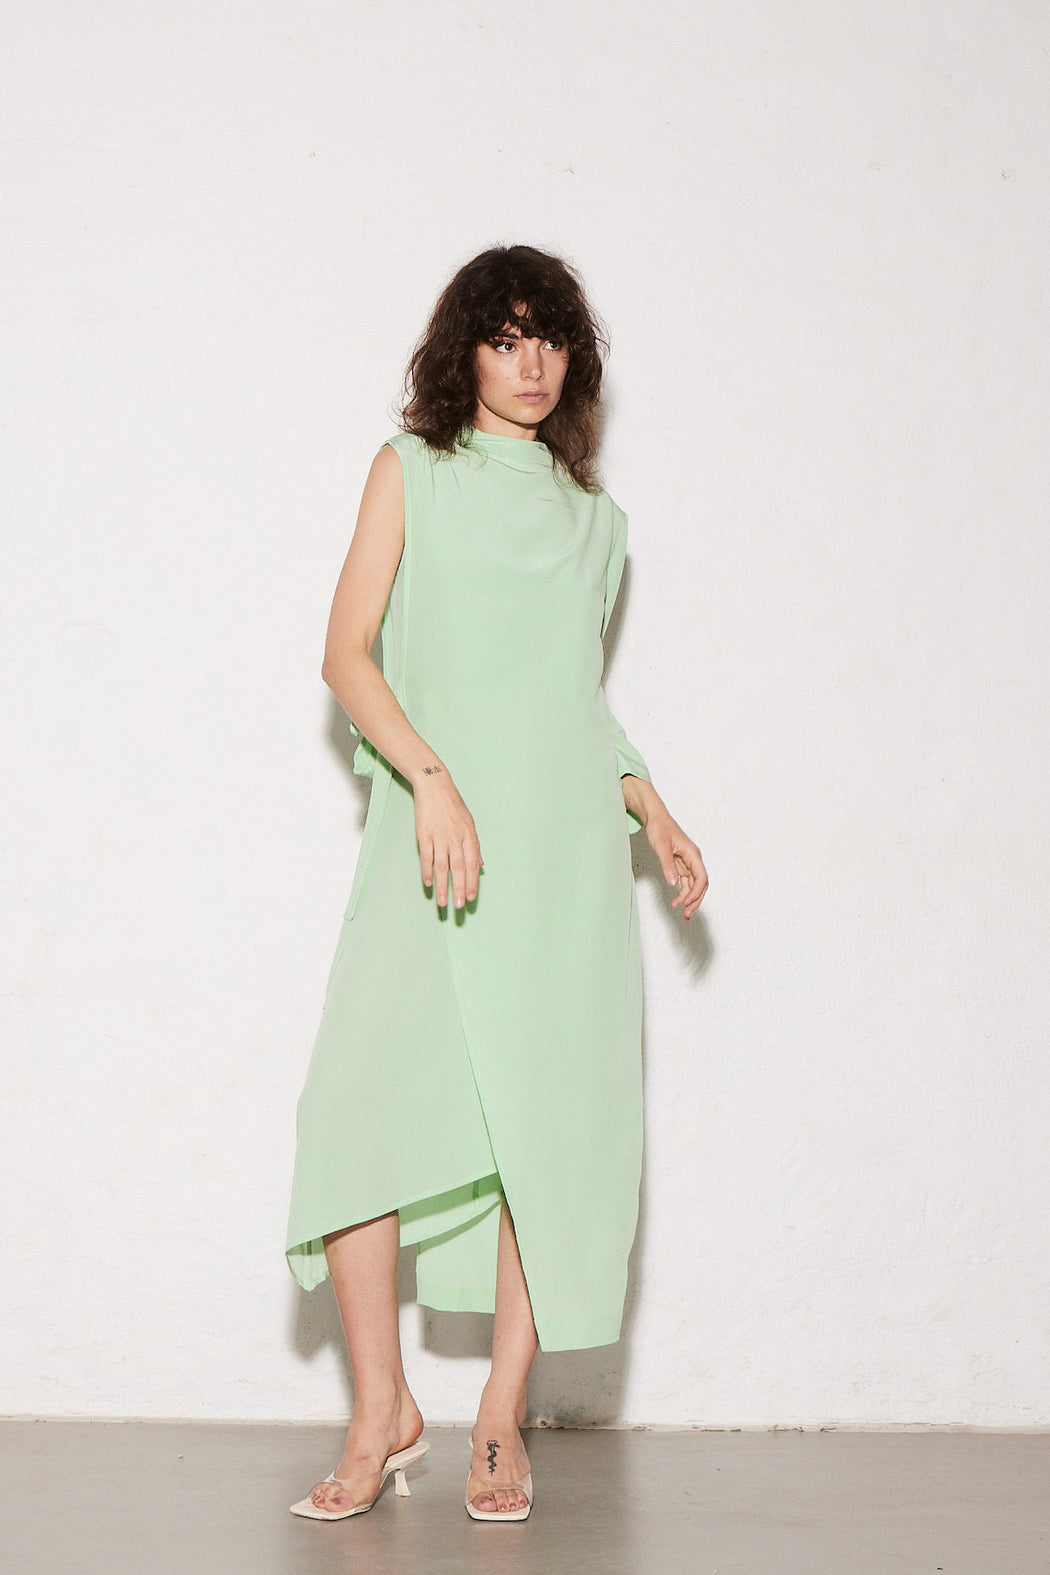 Envelope1976 Nom dress - CDC silk Dress Green ash